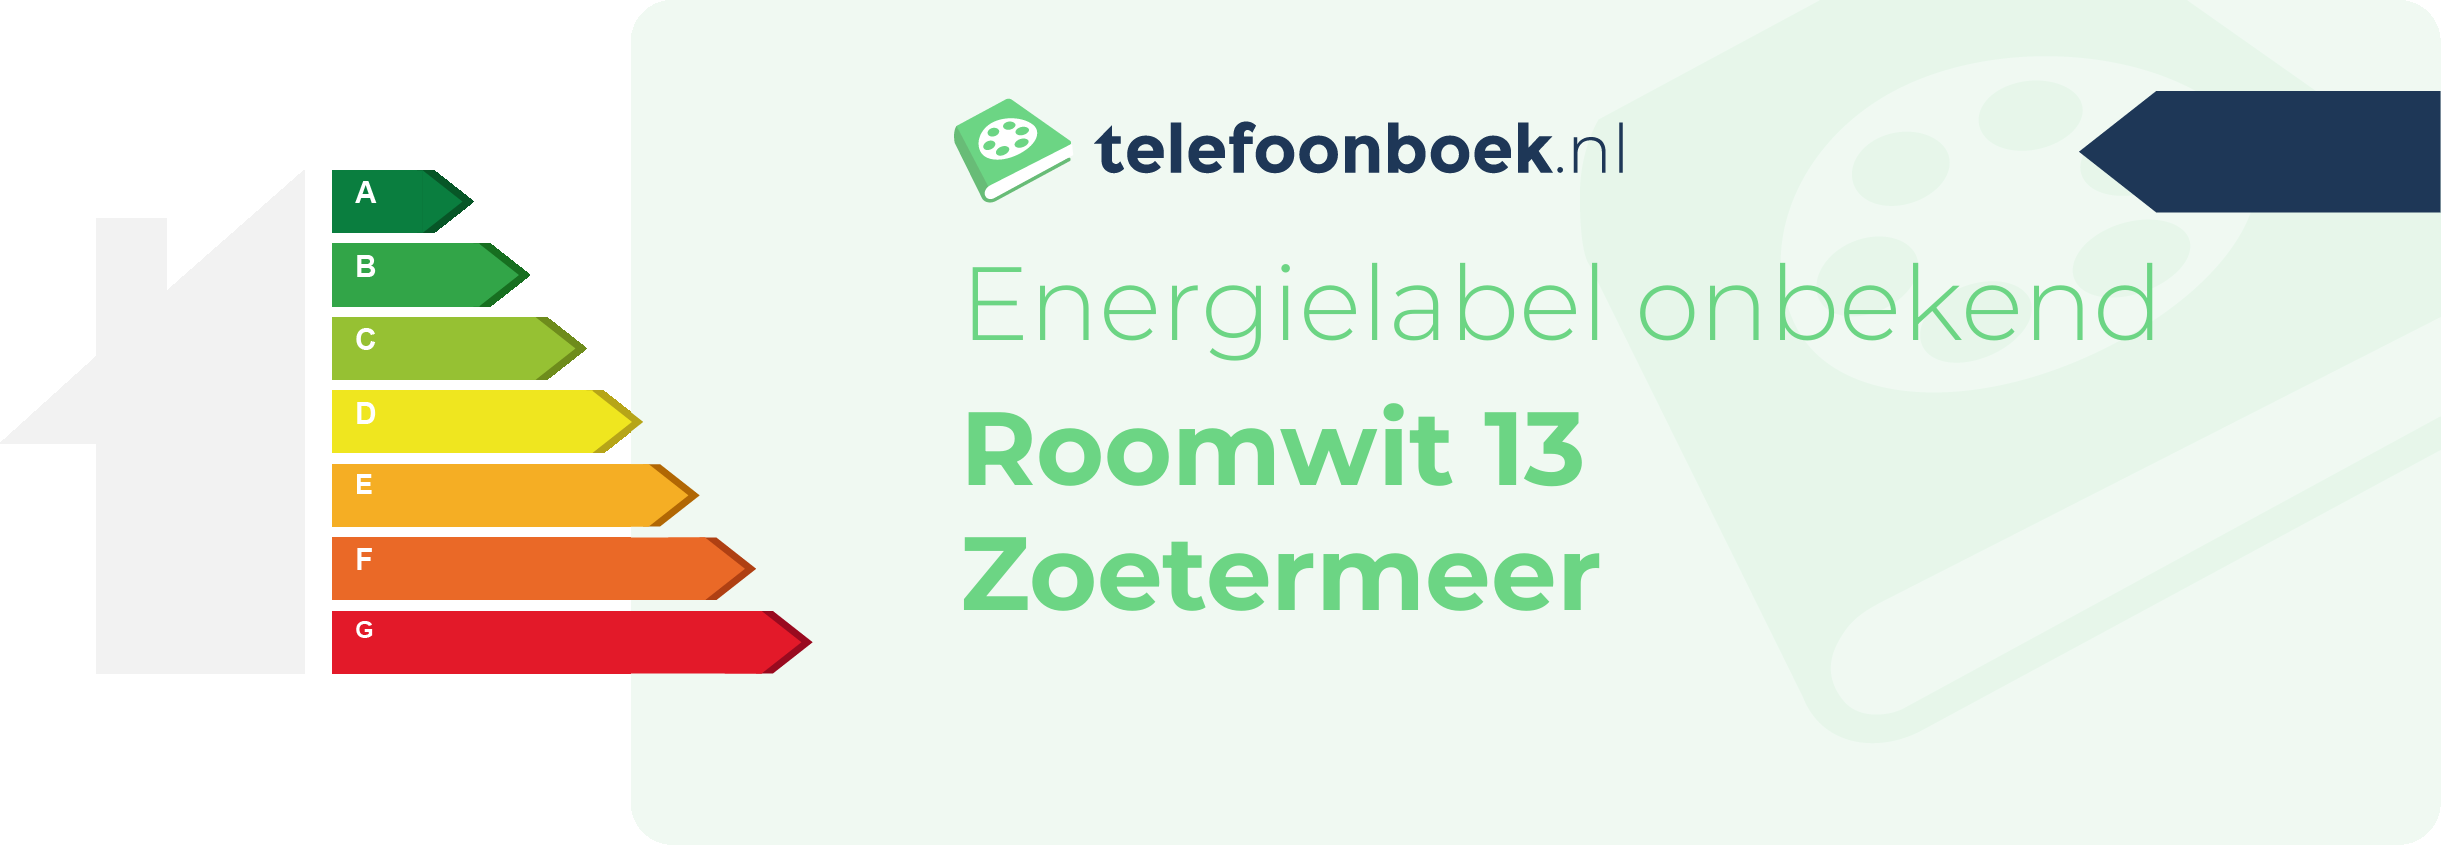 Energielabel Roomwit 13 Zoetermeer